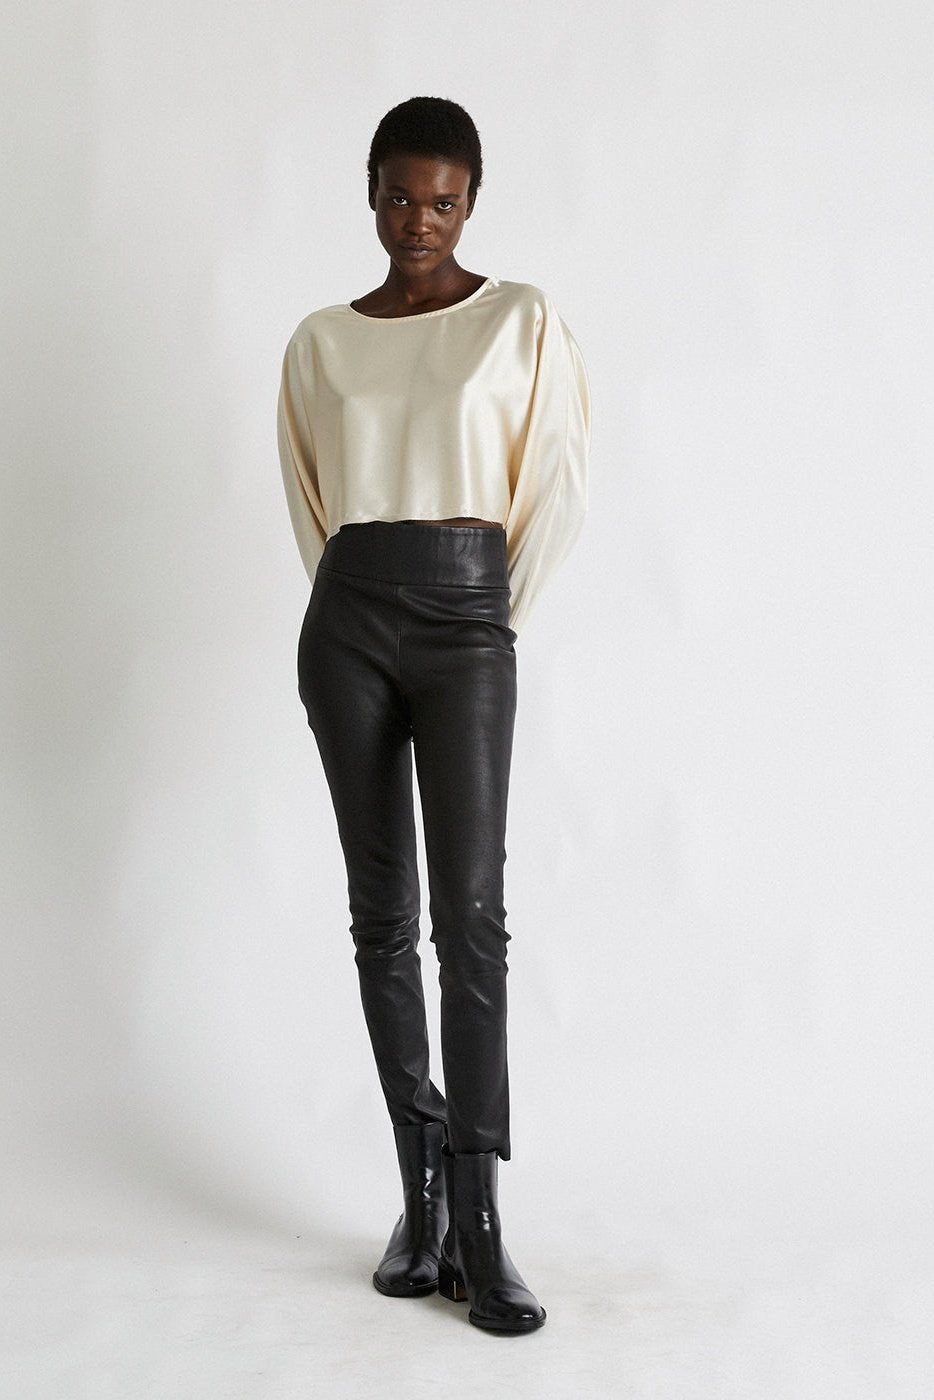 + Beryll Leather Stretch Pants w/ Cotton Lining | Black - + Beryll Leather Stretch Pants w/ Cotton Lining | Black - +Beryll Worn By Good People